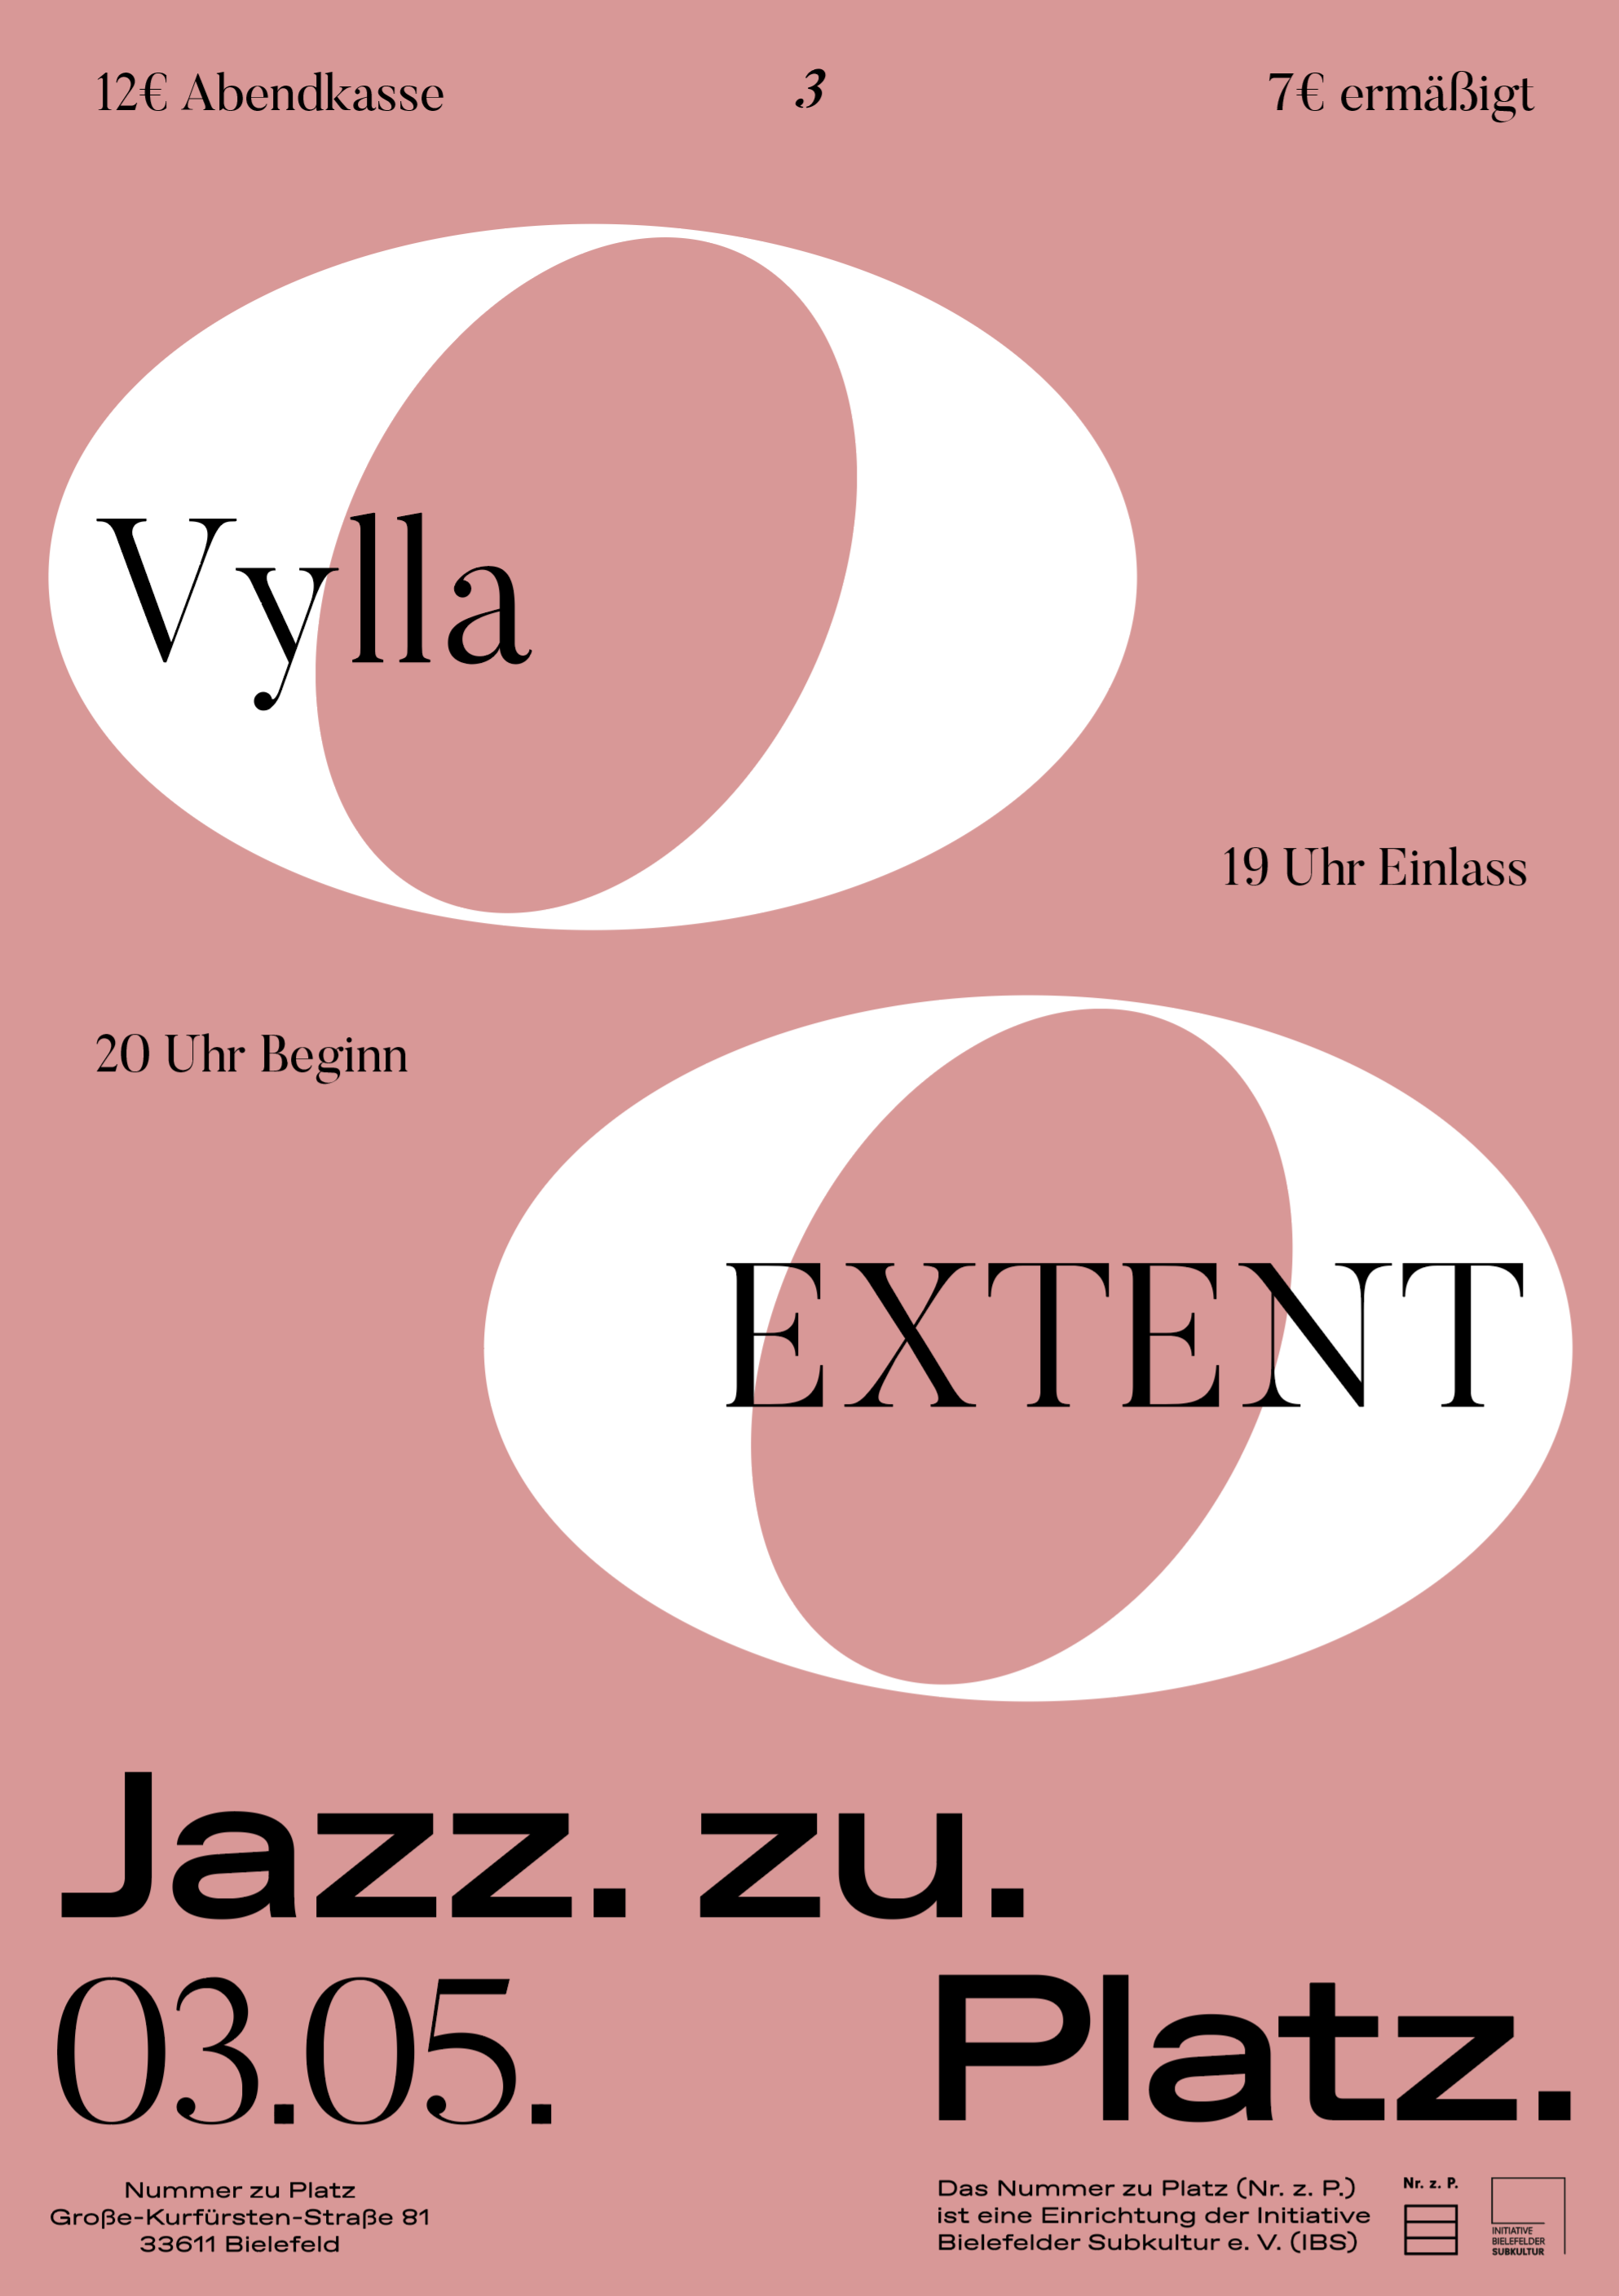 Vylla & EXTENT